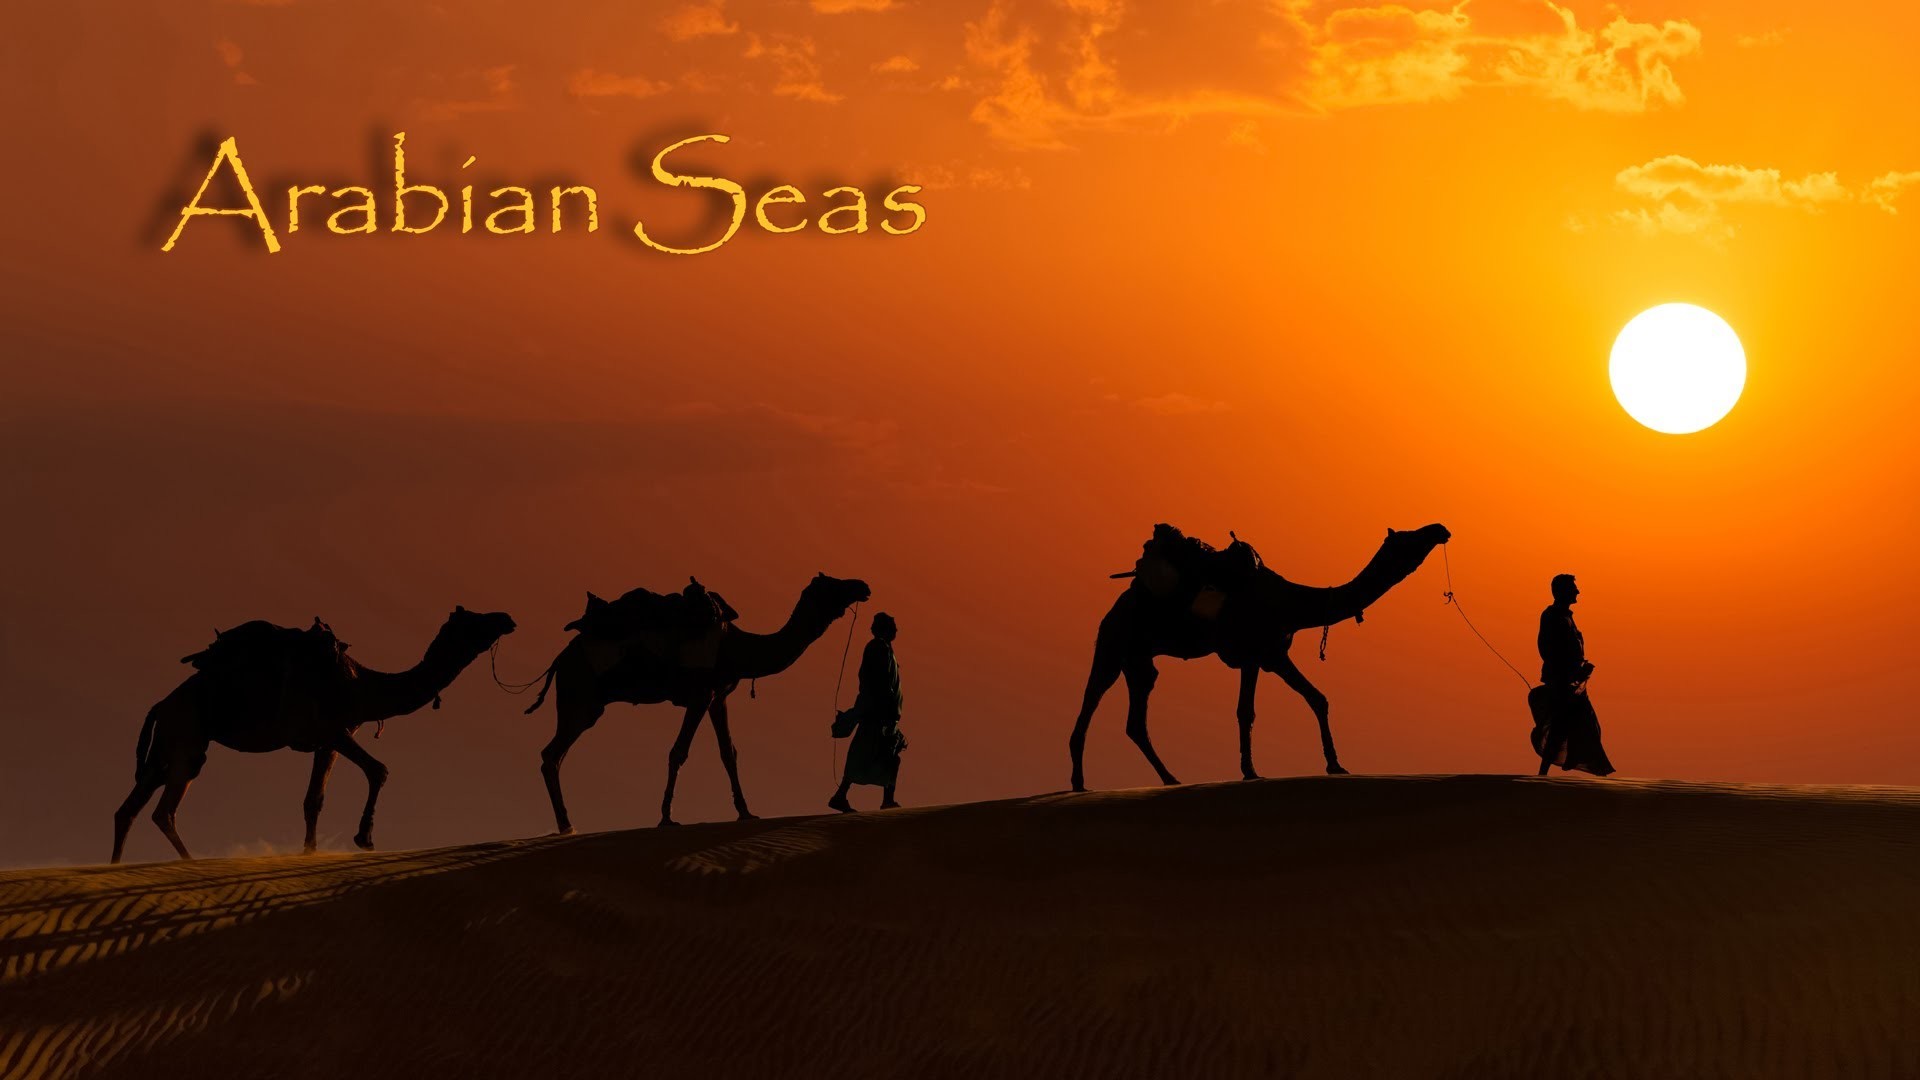 1920x1080 Epic Middle Eastern Spanish Guitar Music: Arabian Seas (Mark Barnwell) -  YouTube